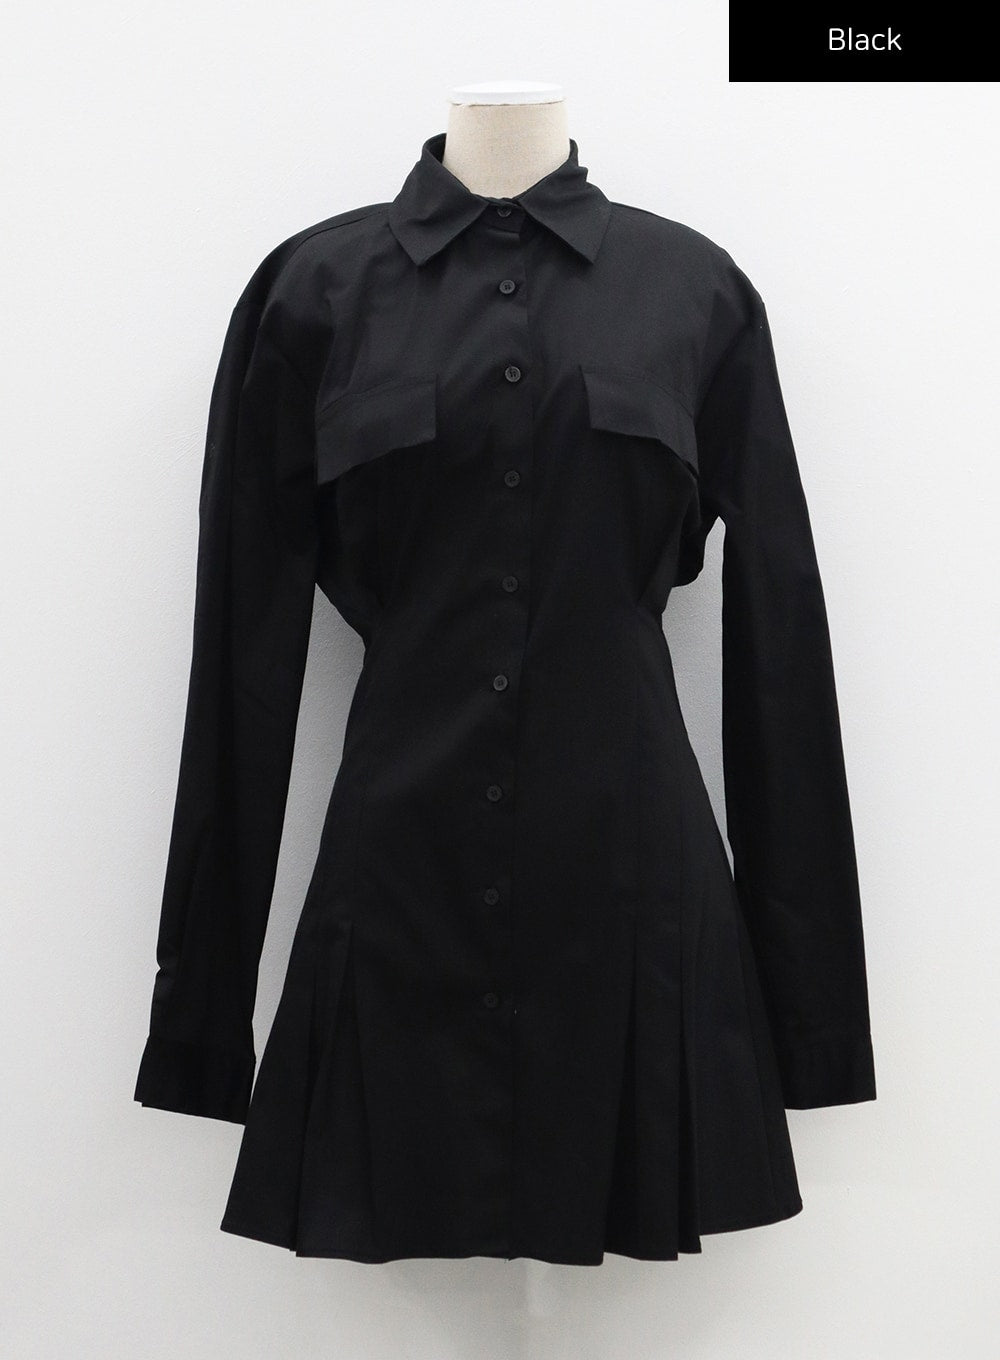 Pocket Detail Pleated Shirt Dress CF310